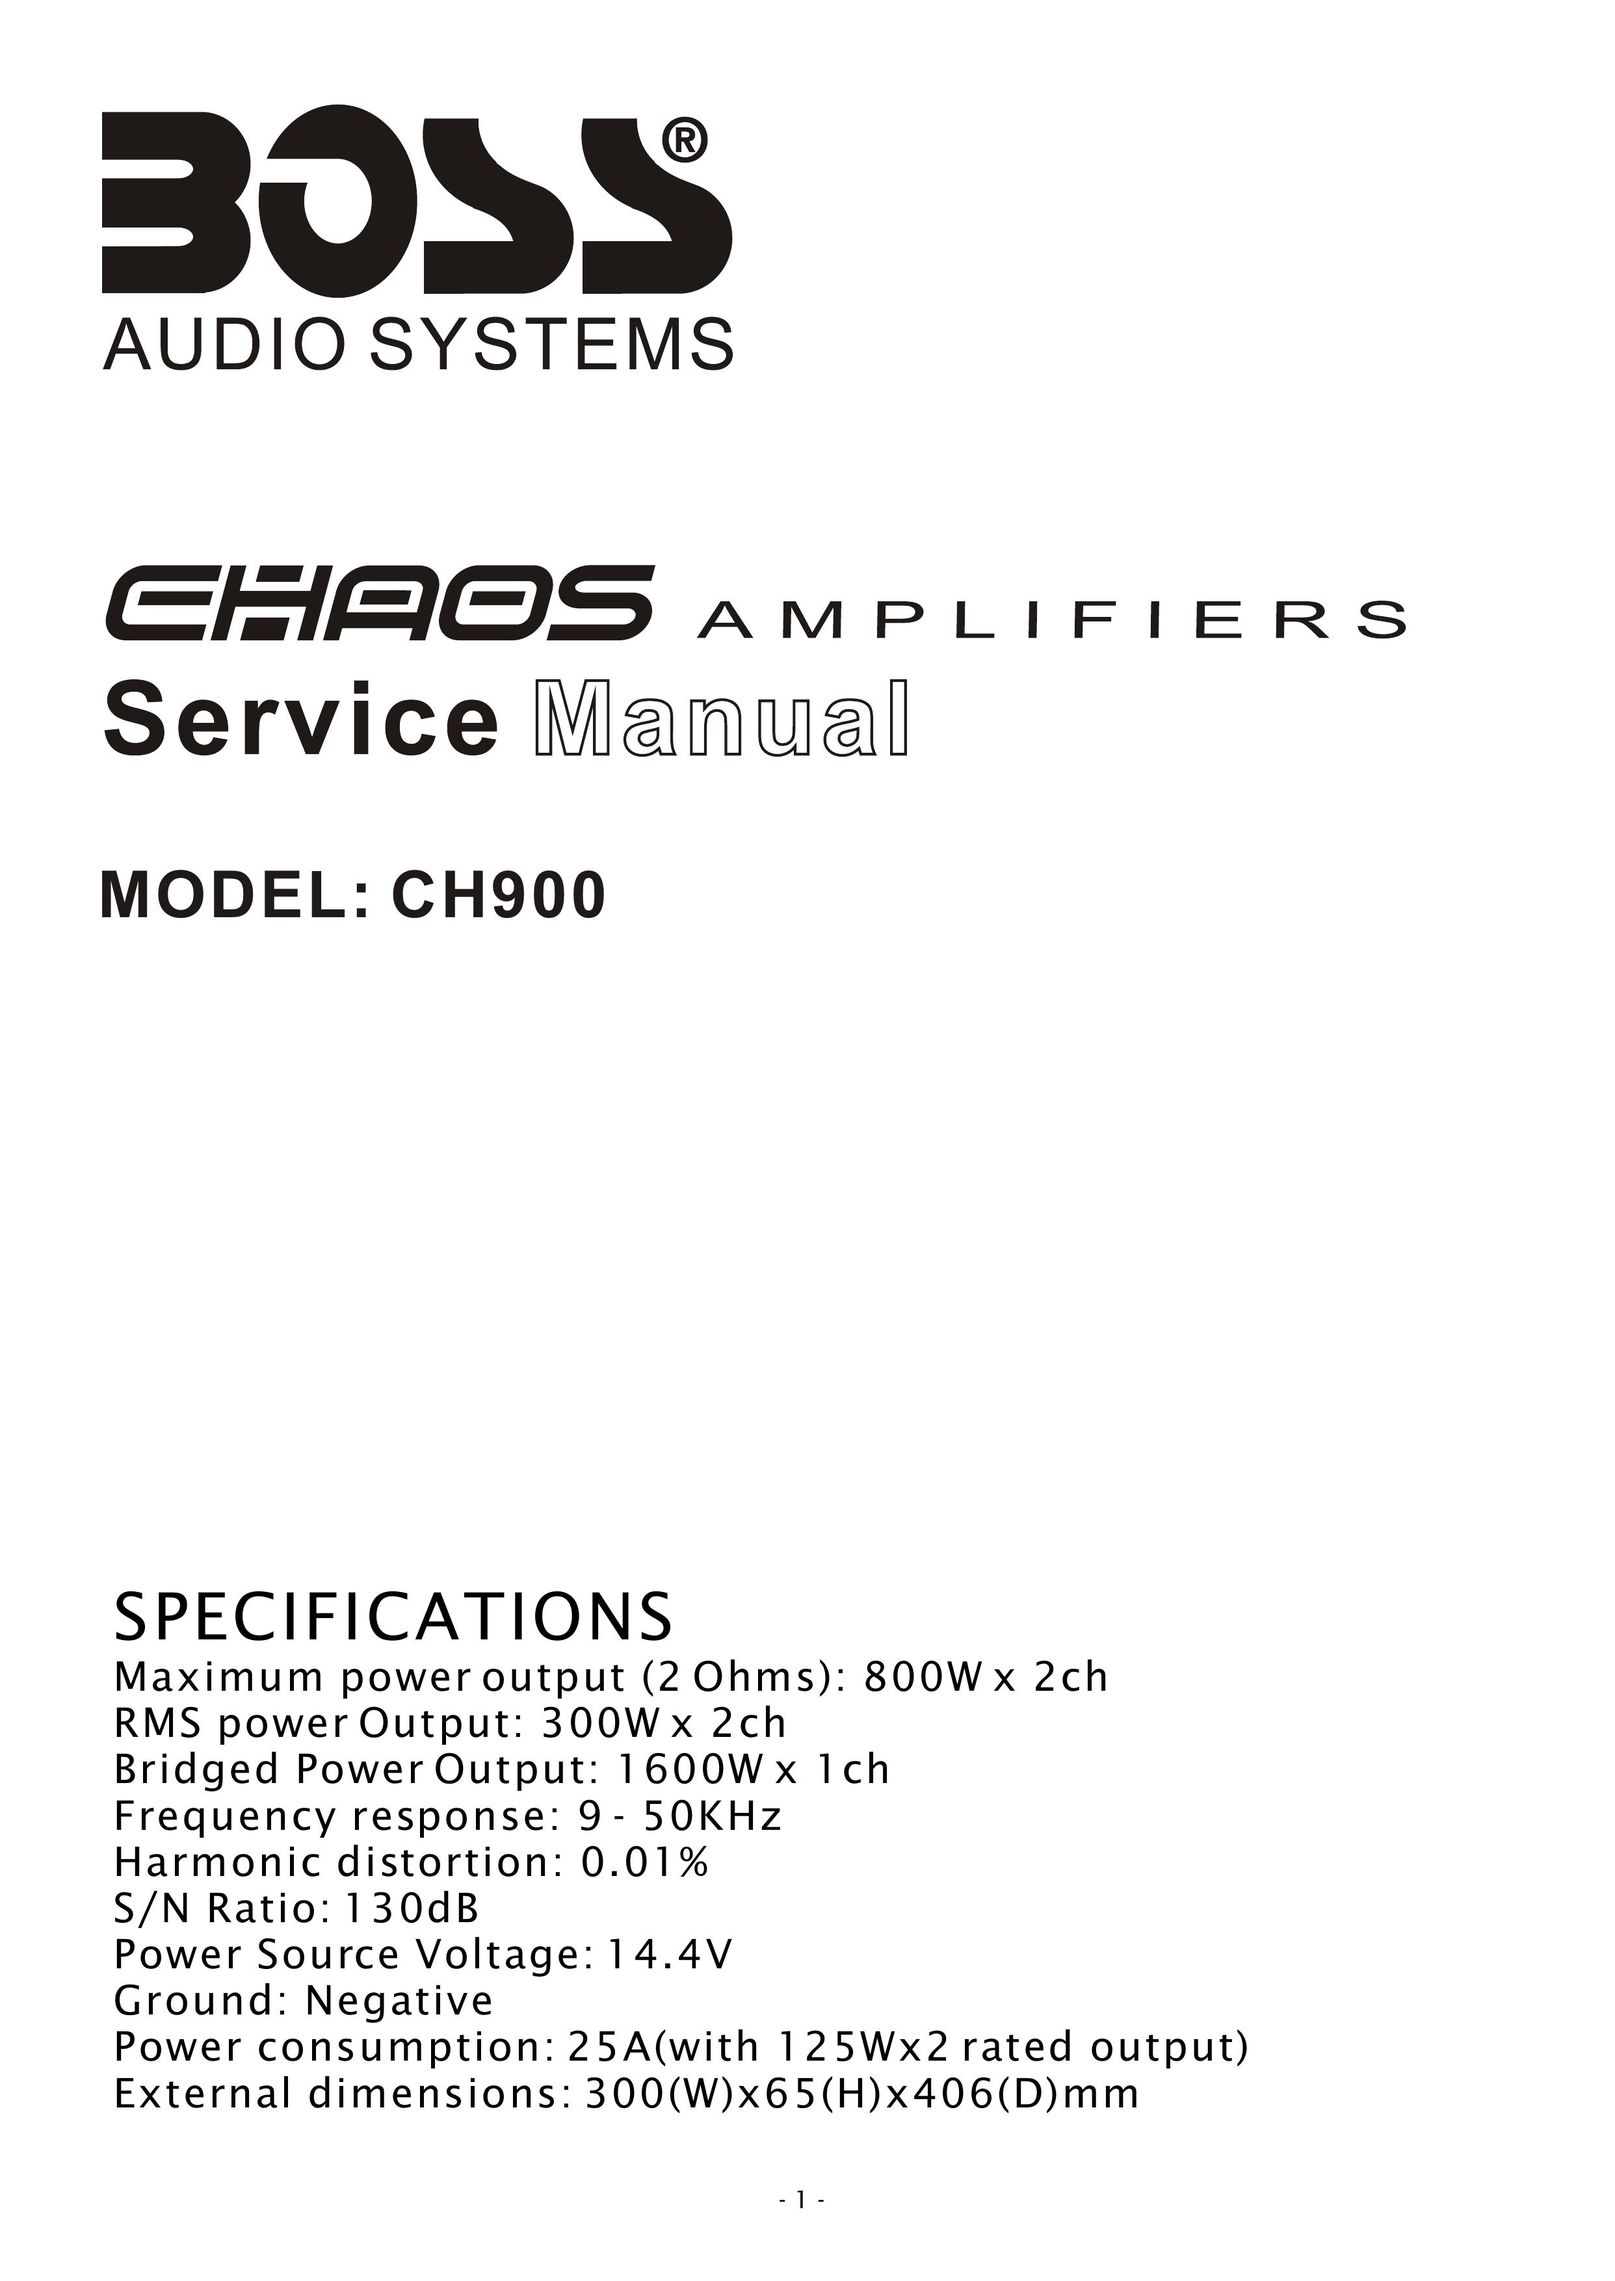 Boss Audio Systems CH900 Car Amplifier User Manual